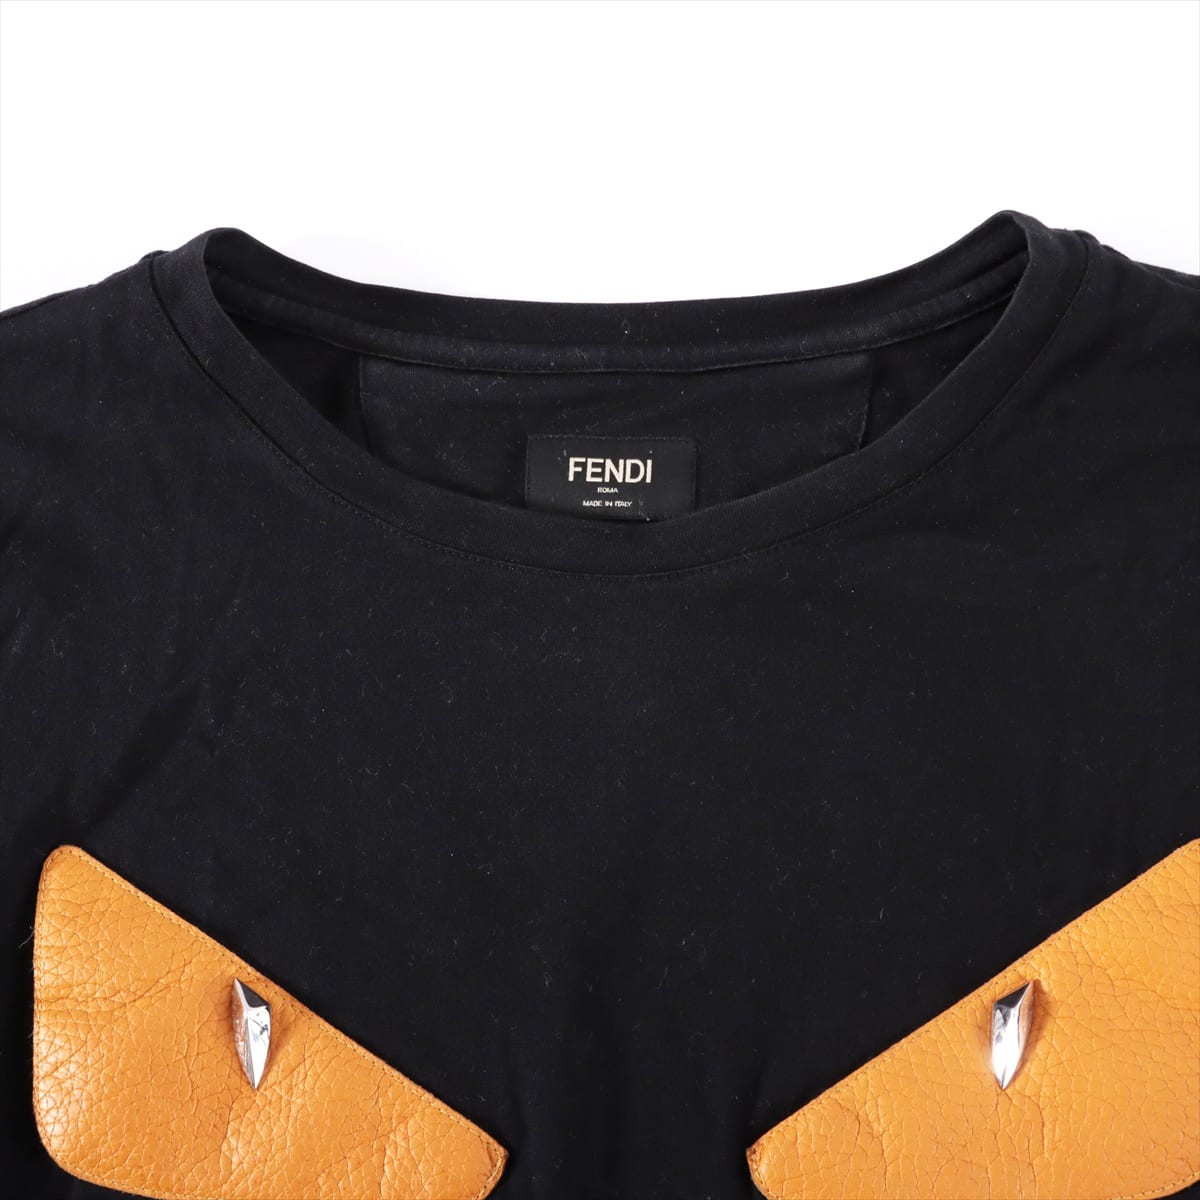 Fendi Bag Bugs Cotton Long T shirts 50 Men's Black